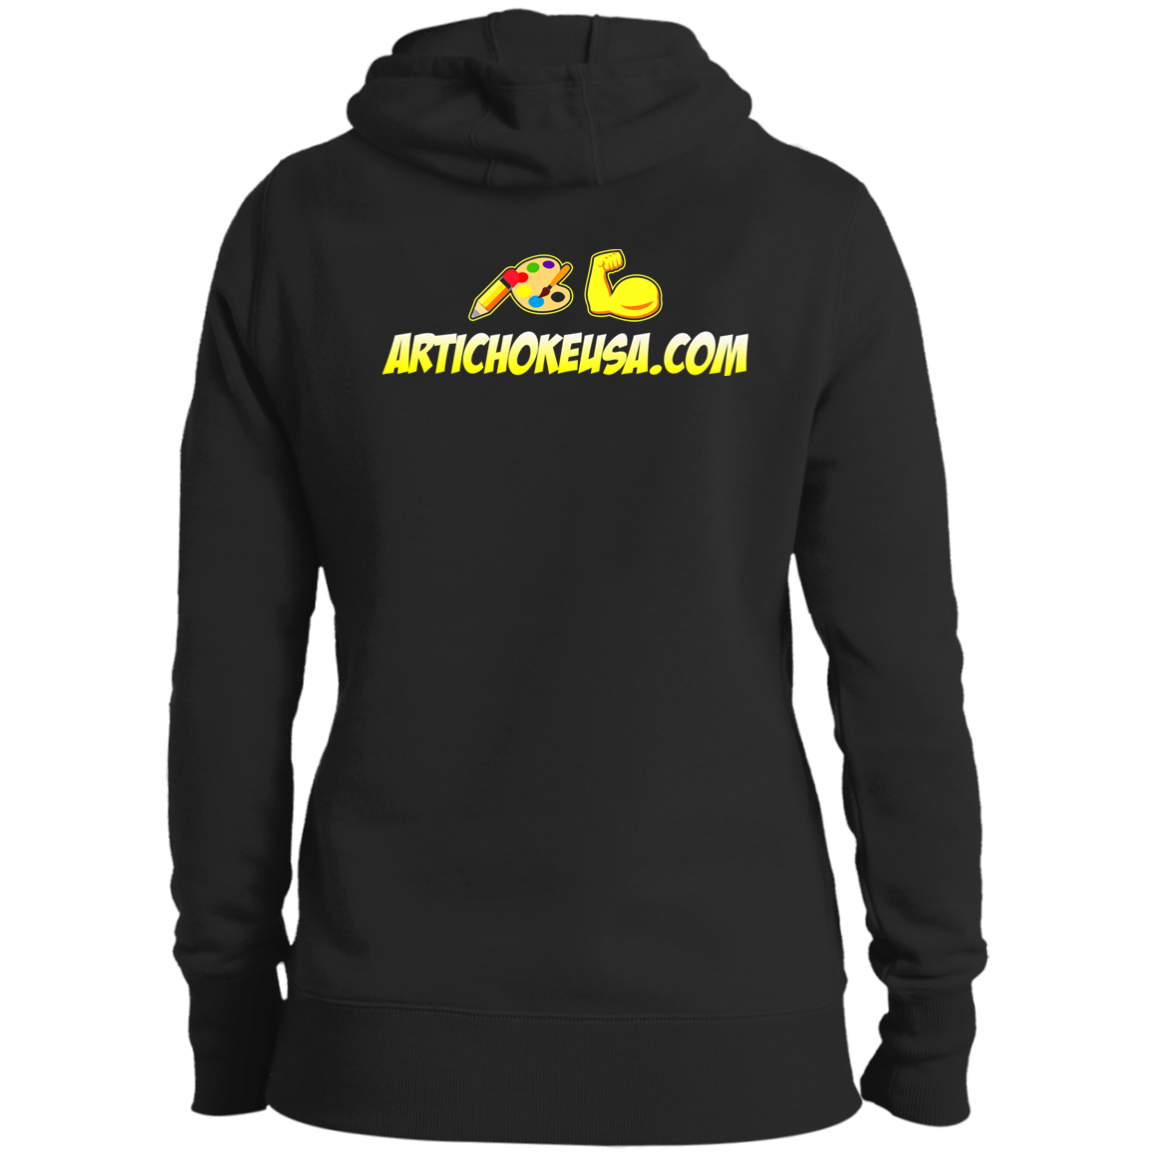 ArtichokeUSA Custom Design. Art Strong. Ladies' Pullover Hooded Sweatshirt